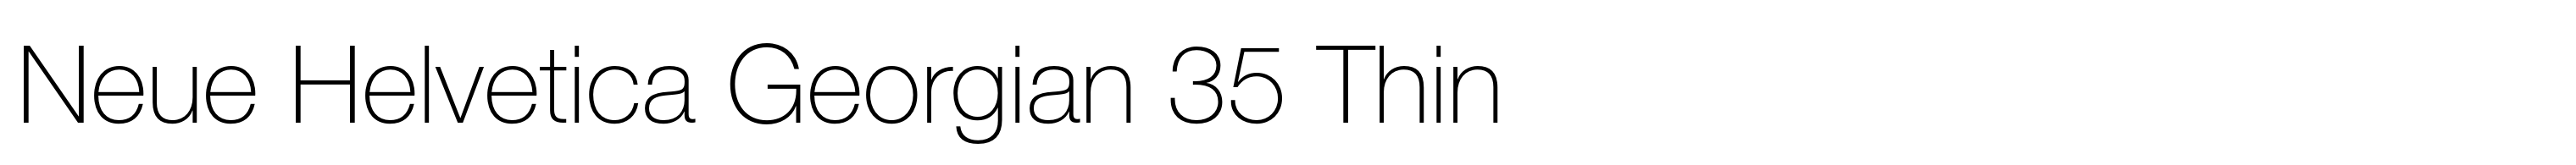 Neue Helvetica Georgian 35 Thin